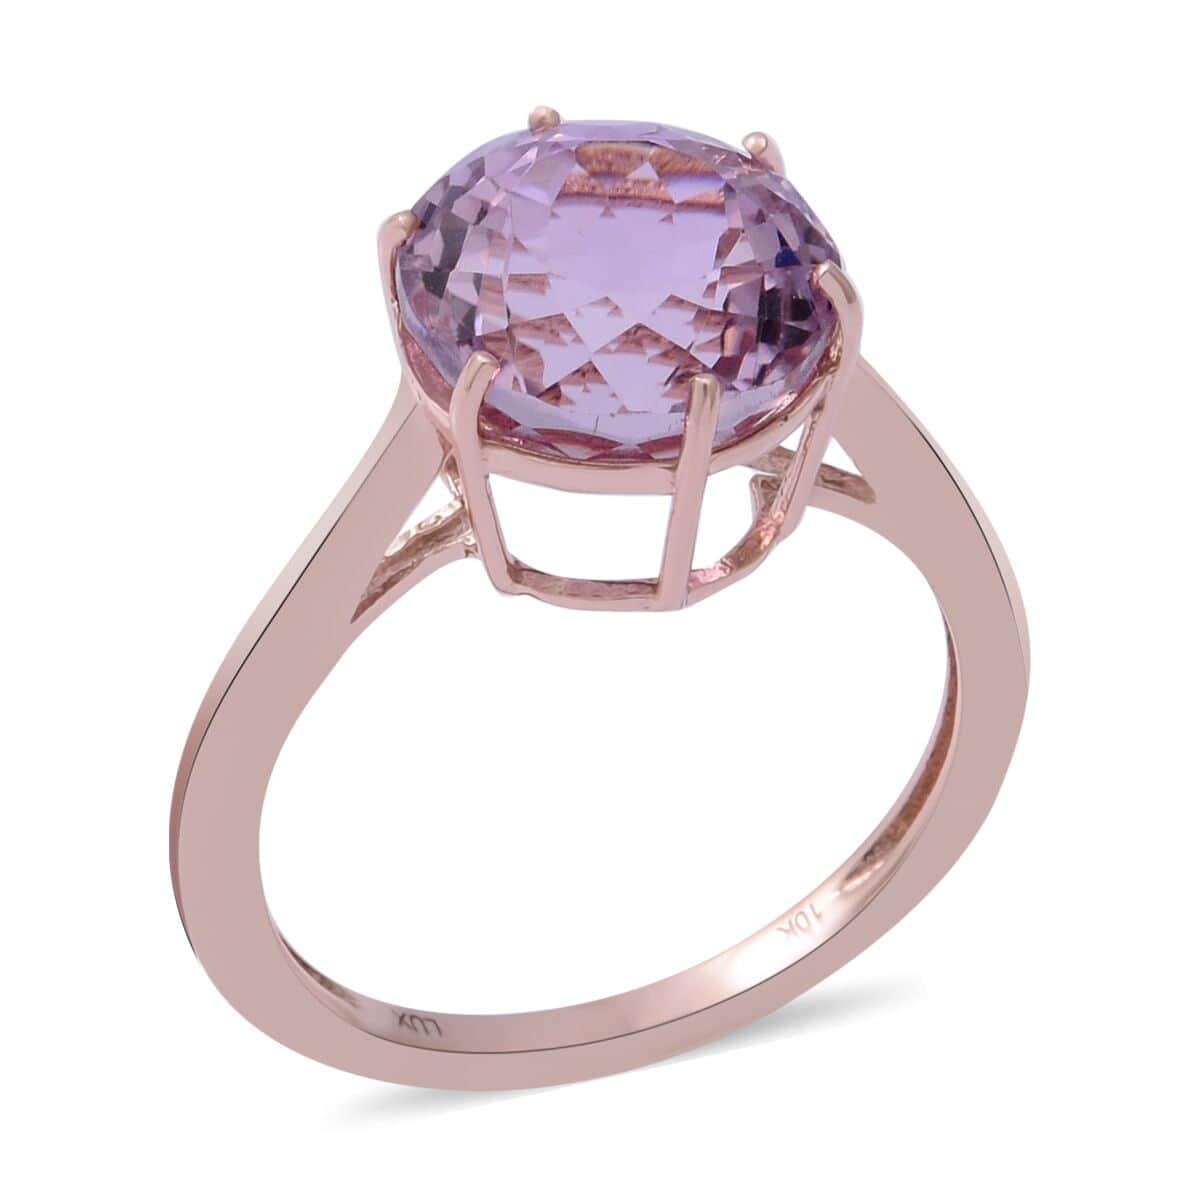 LUXORO 10K Rose Gold Premium Kunzite Solitaire Ring (Size 10.0) 2 Grams 5.00 ctw image number 2